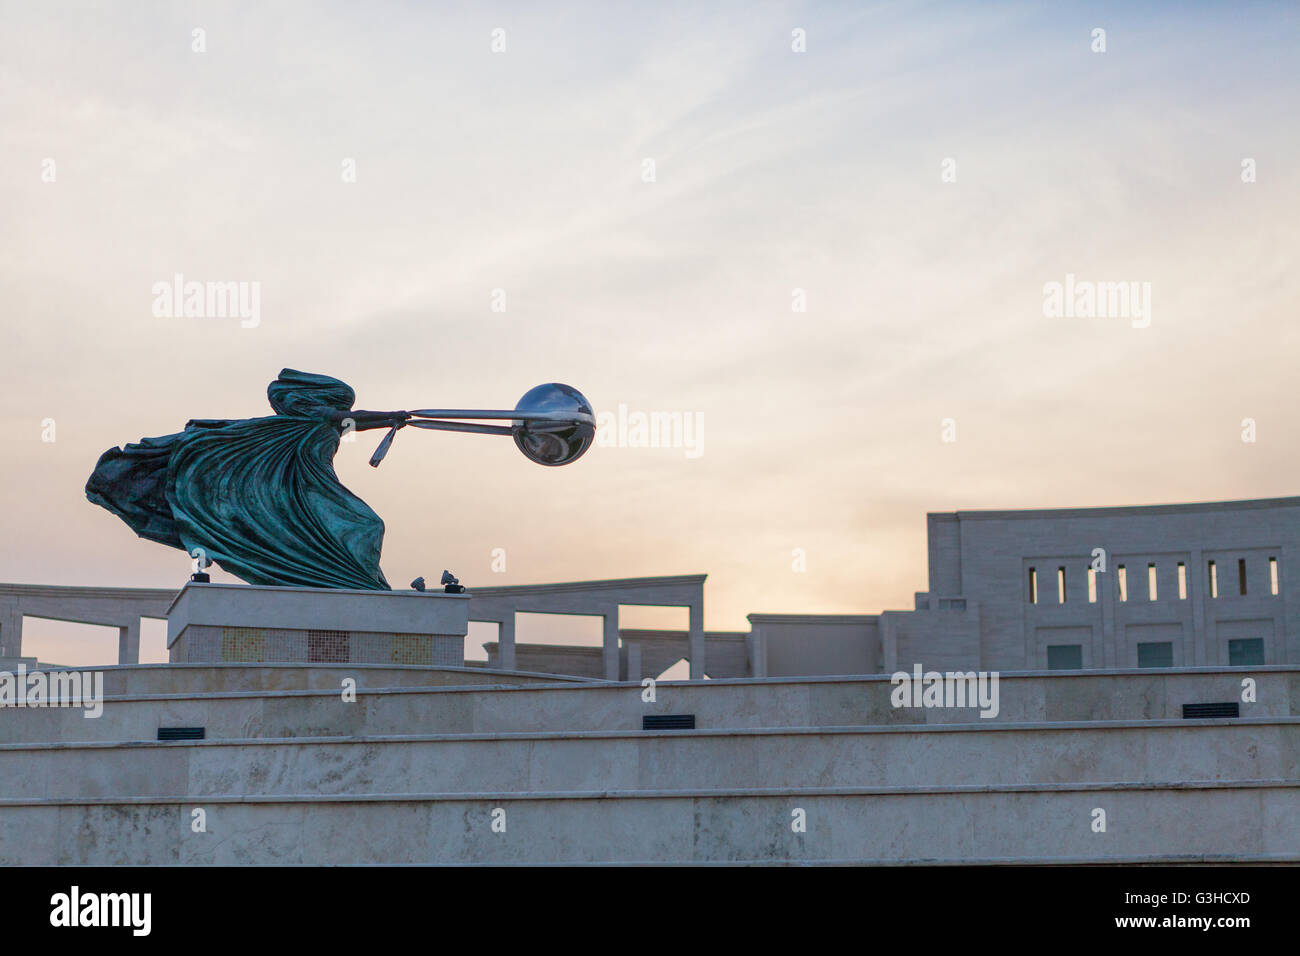 Amphitheater statue - Force of Nature II by Lorenzo Quinn Katara Cultural Village, Doha, Qatar Stock Photo